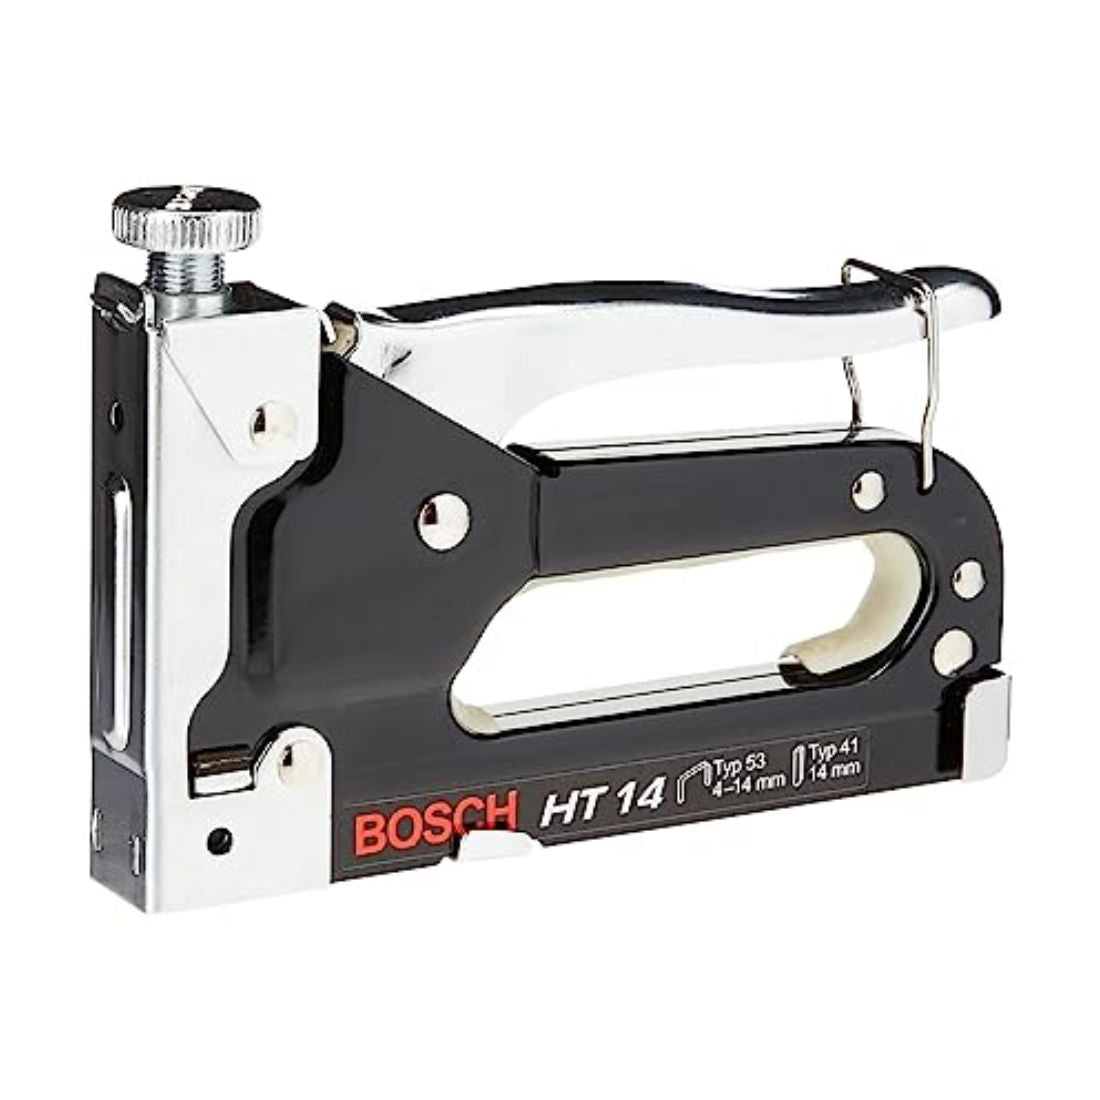 Bosch Professional Heavy Duty Stapler Gun HT 14, Black (0603038001) Tacker